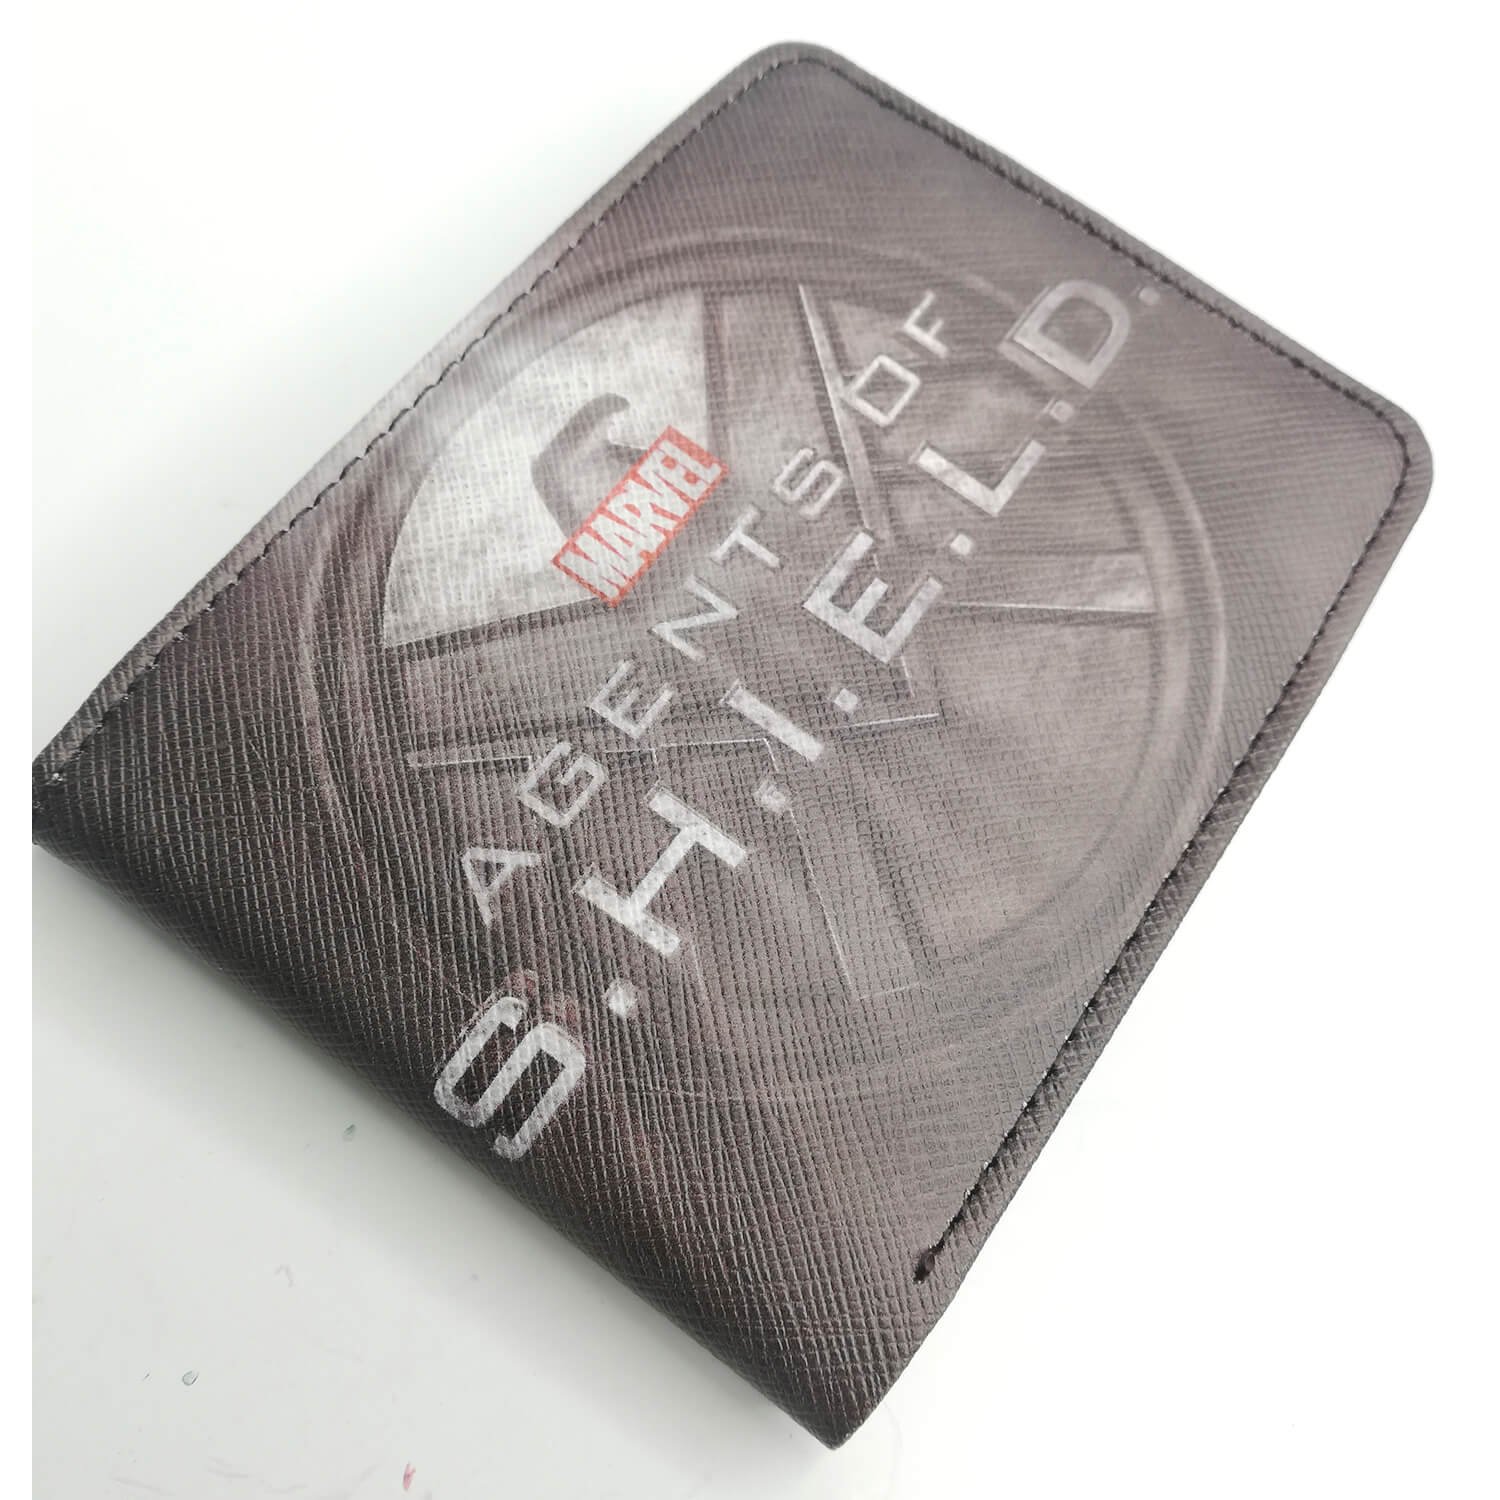 billetera S.H.I.E.L.D comic accesorio logo Agents of S.H.I.E.L.D. geek tienda friki